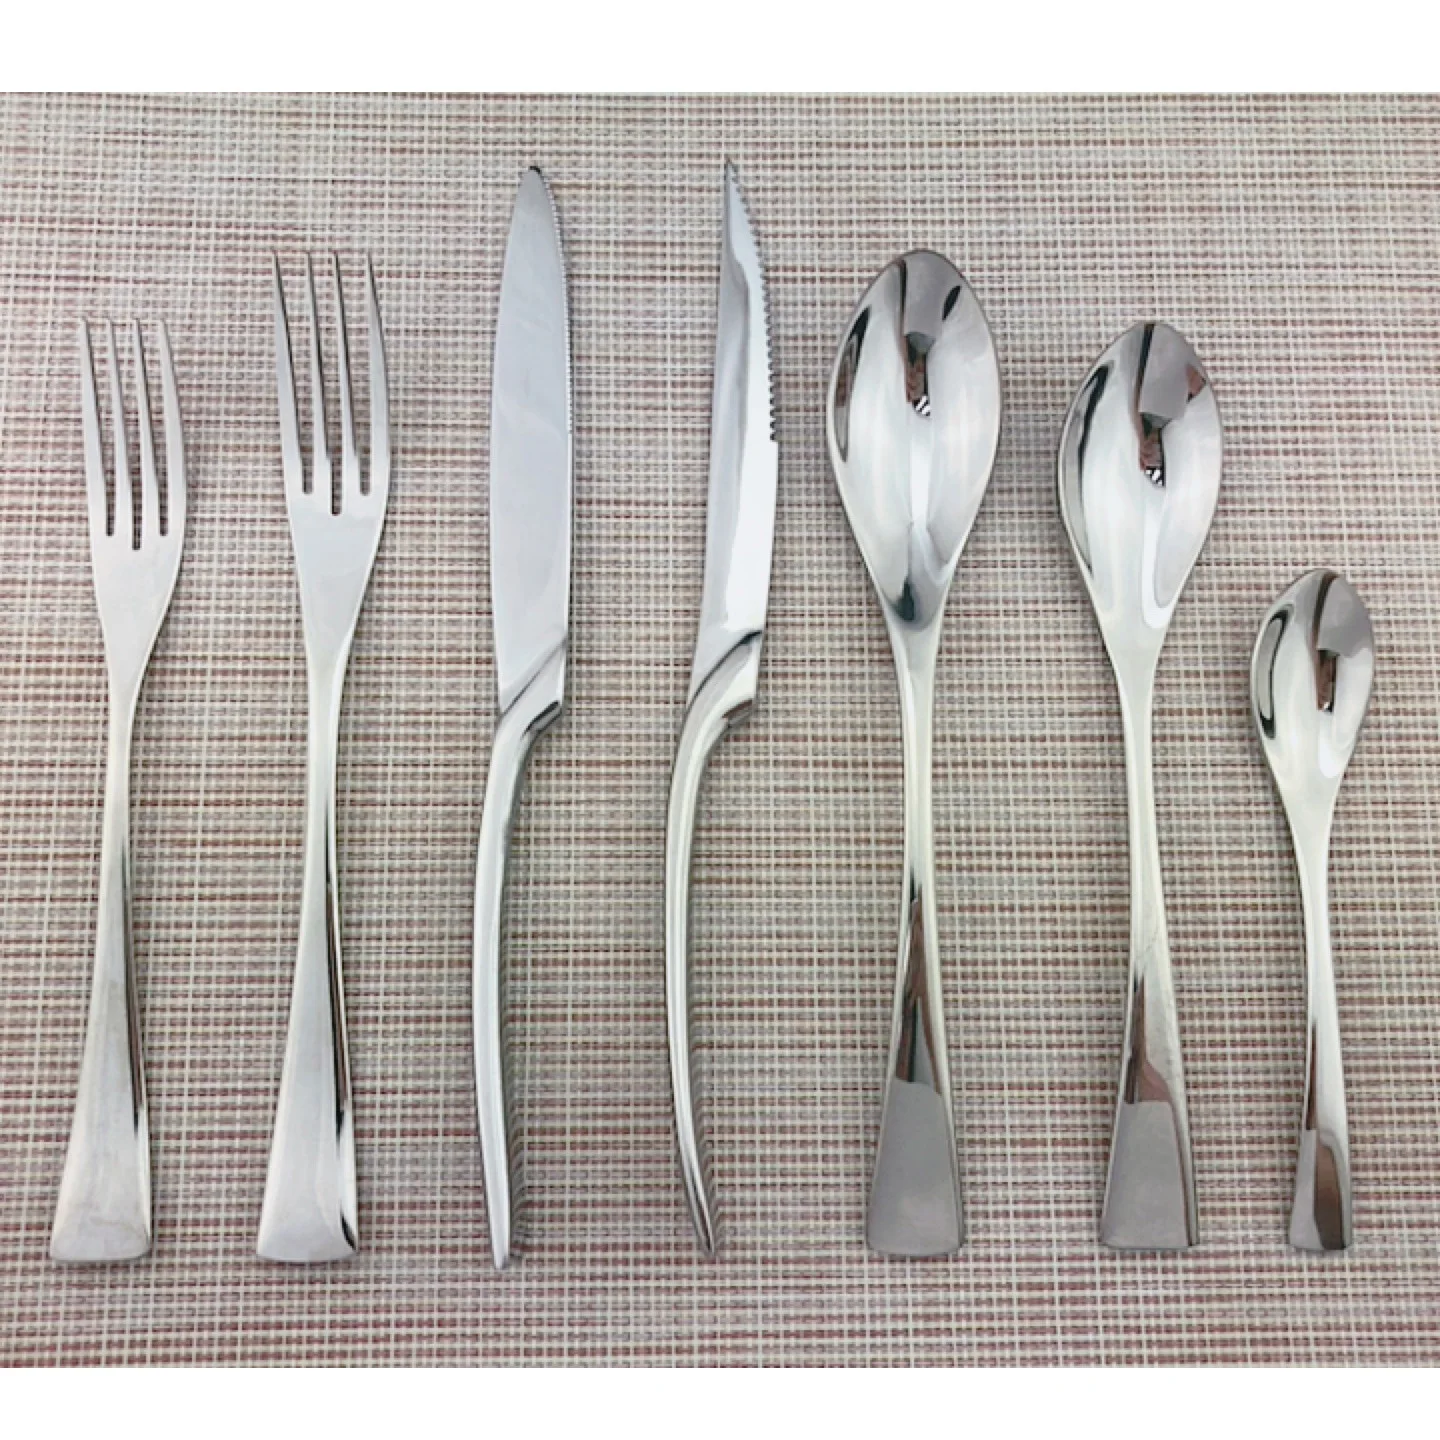 

24 Pcs Shiny Black Dinnerware Cutlery Set Stainless Steel Sharp Steak Knives Forks Scoops Silverware Set Dinner Tableware